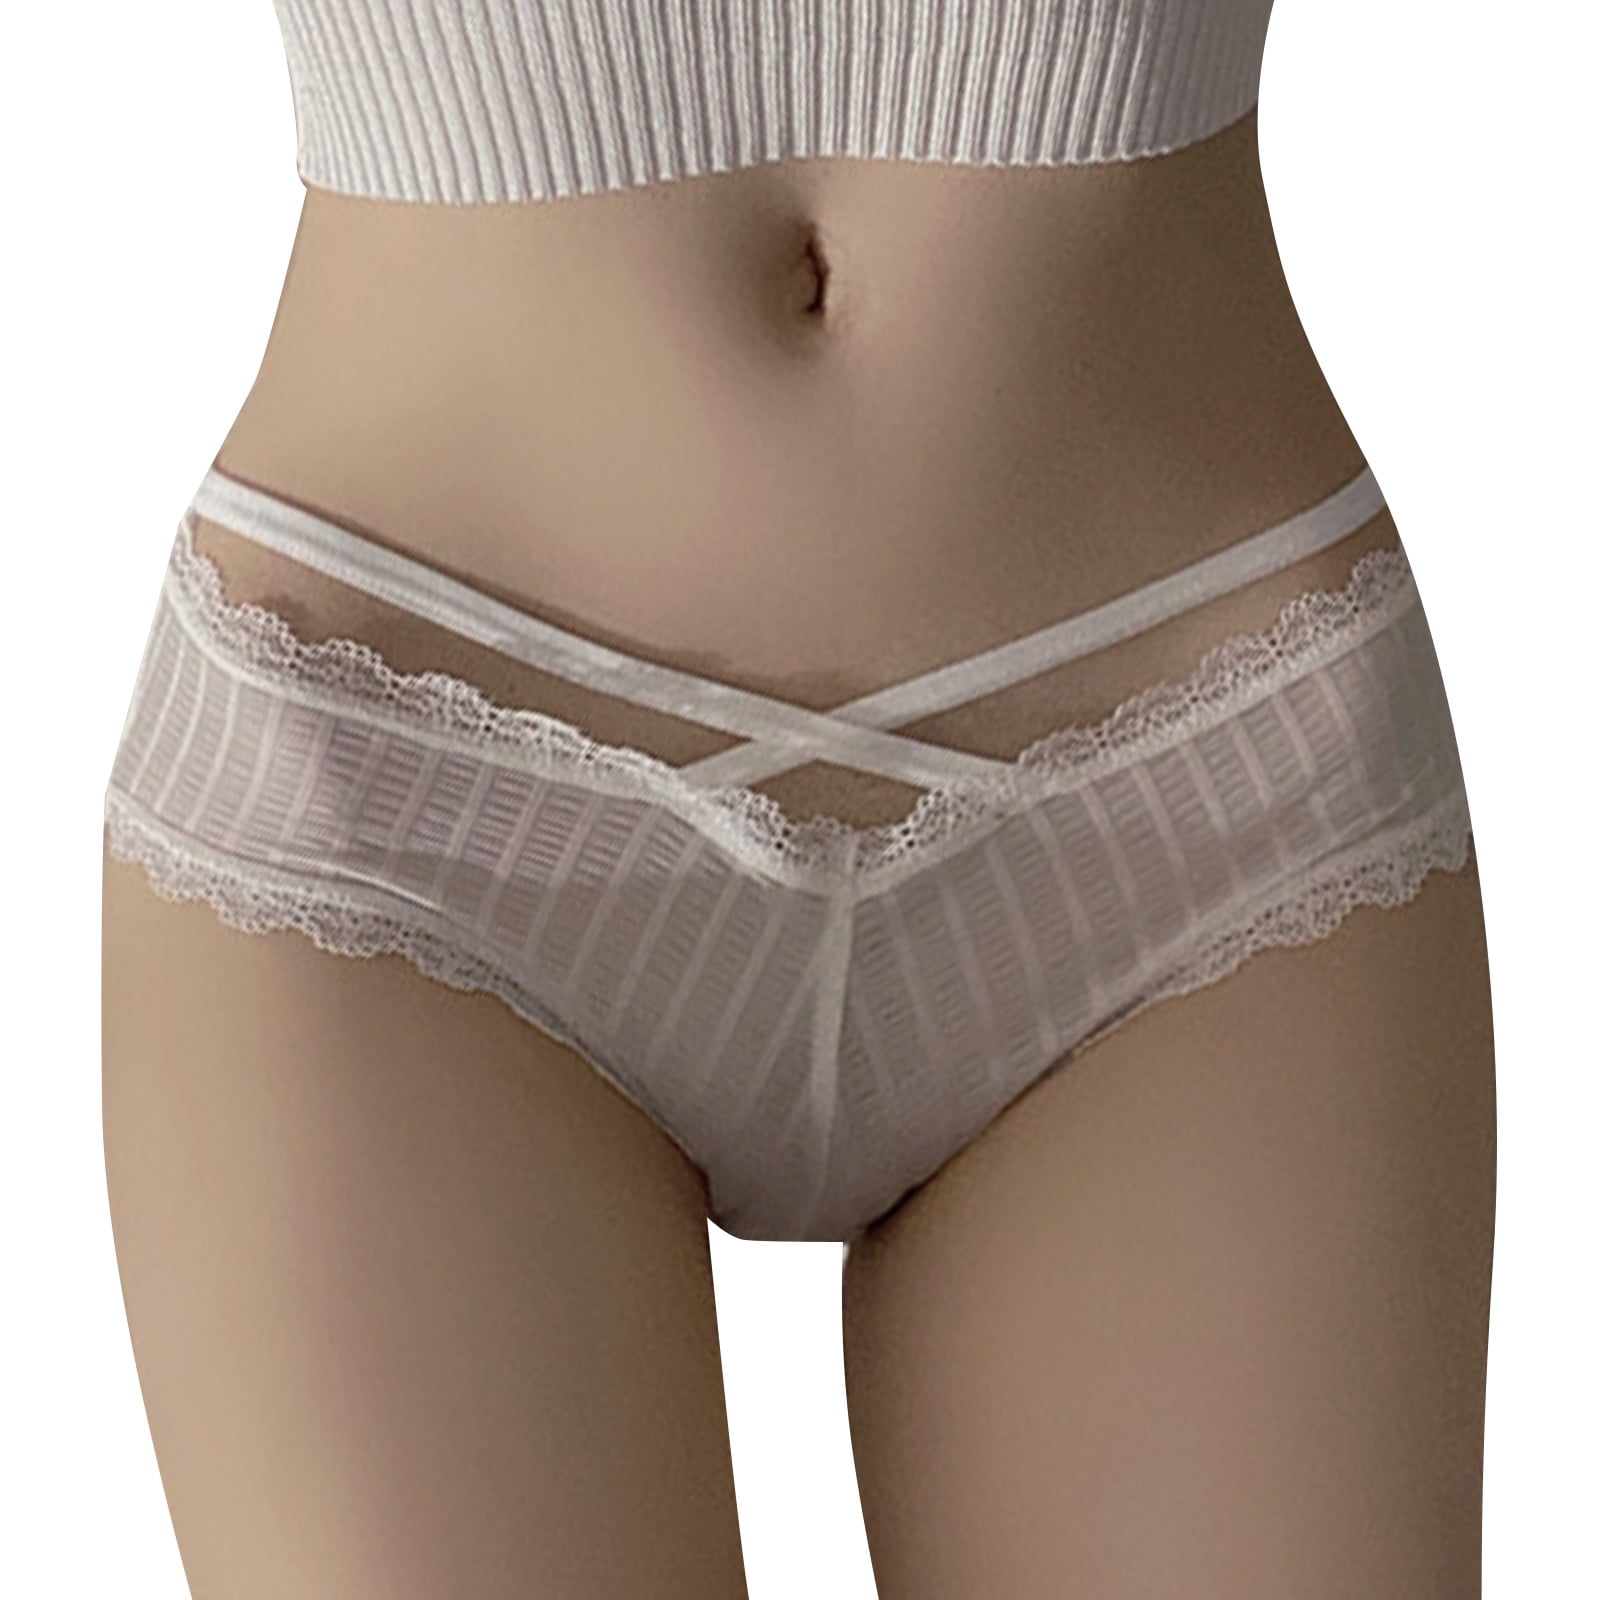 ZRBYWB Women's Underwear Low Waist Mature Girls Tight Ladies SizeLace Trim  Spandex Pantys Brief Underwear For Panties For Women